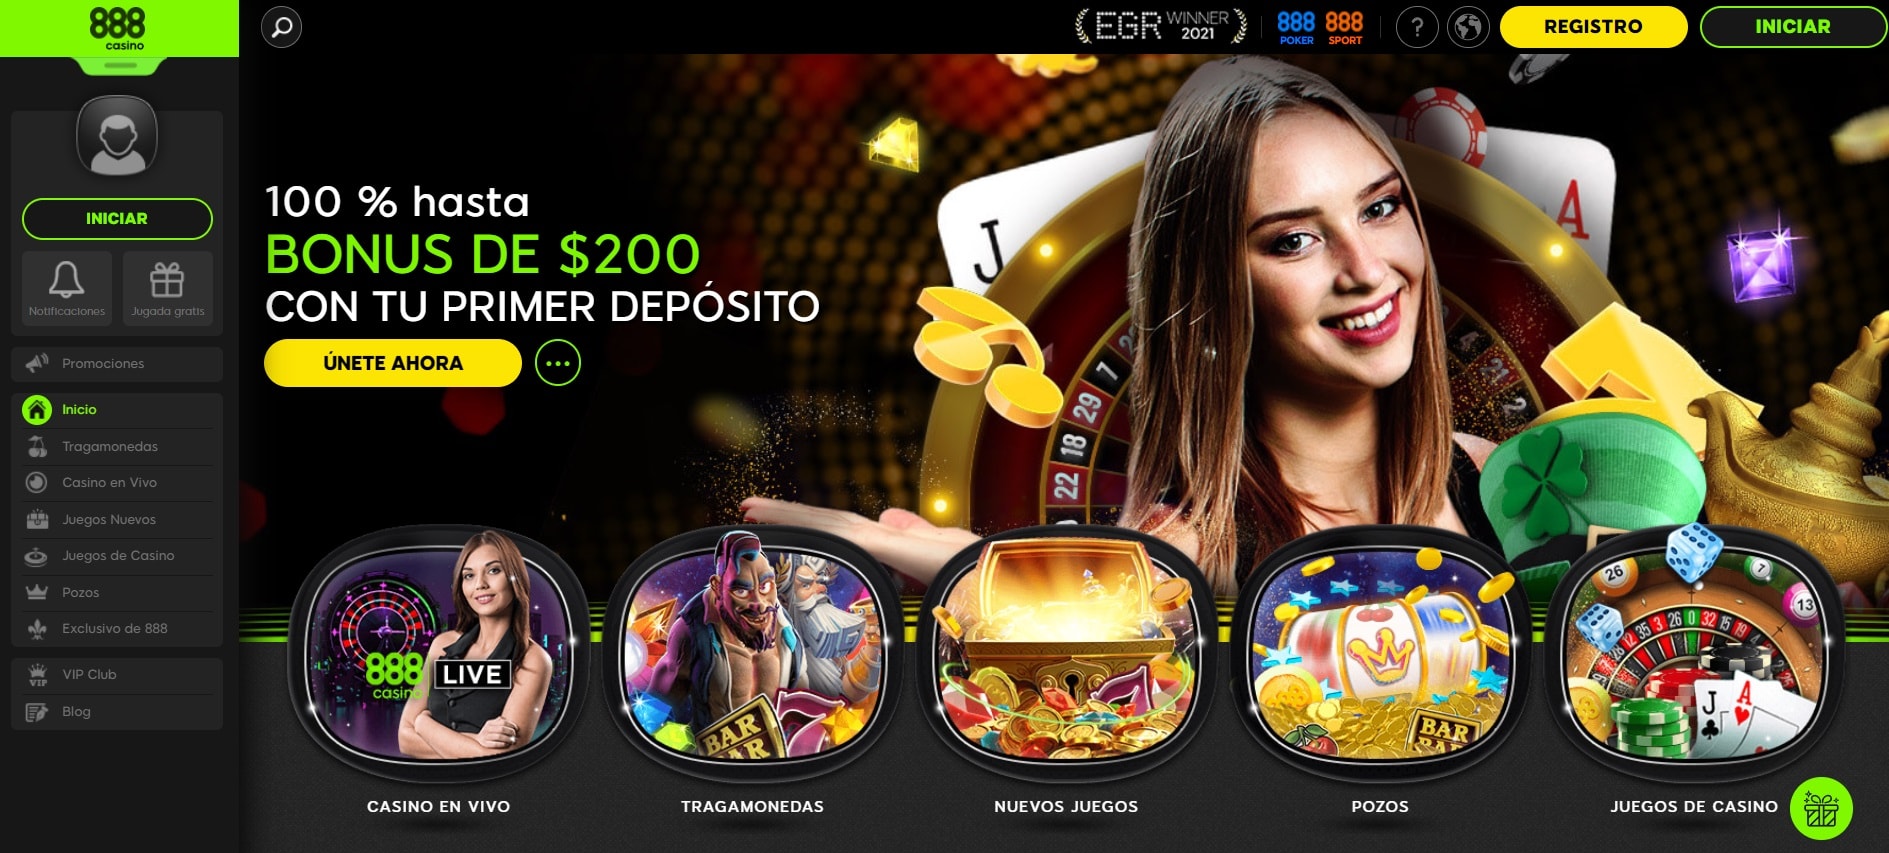 casinos online chile 888 